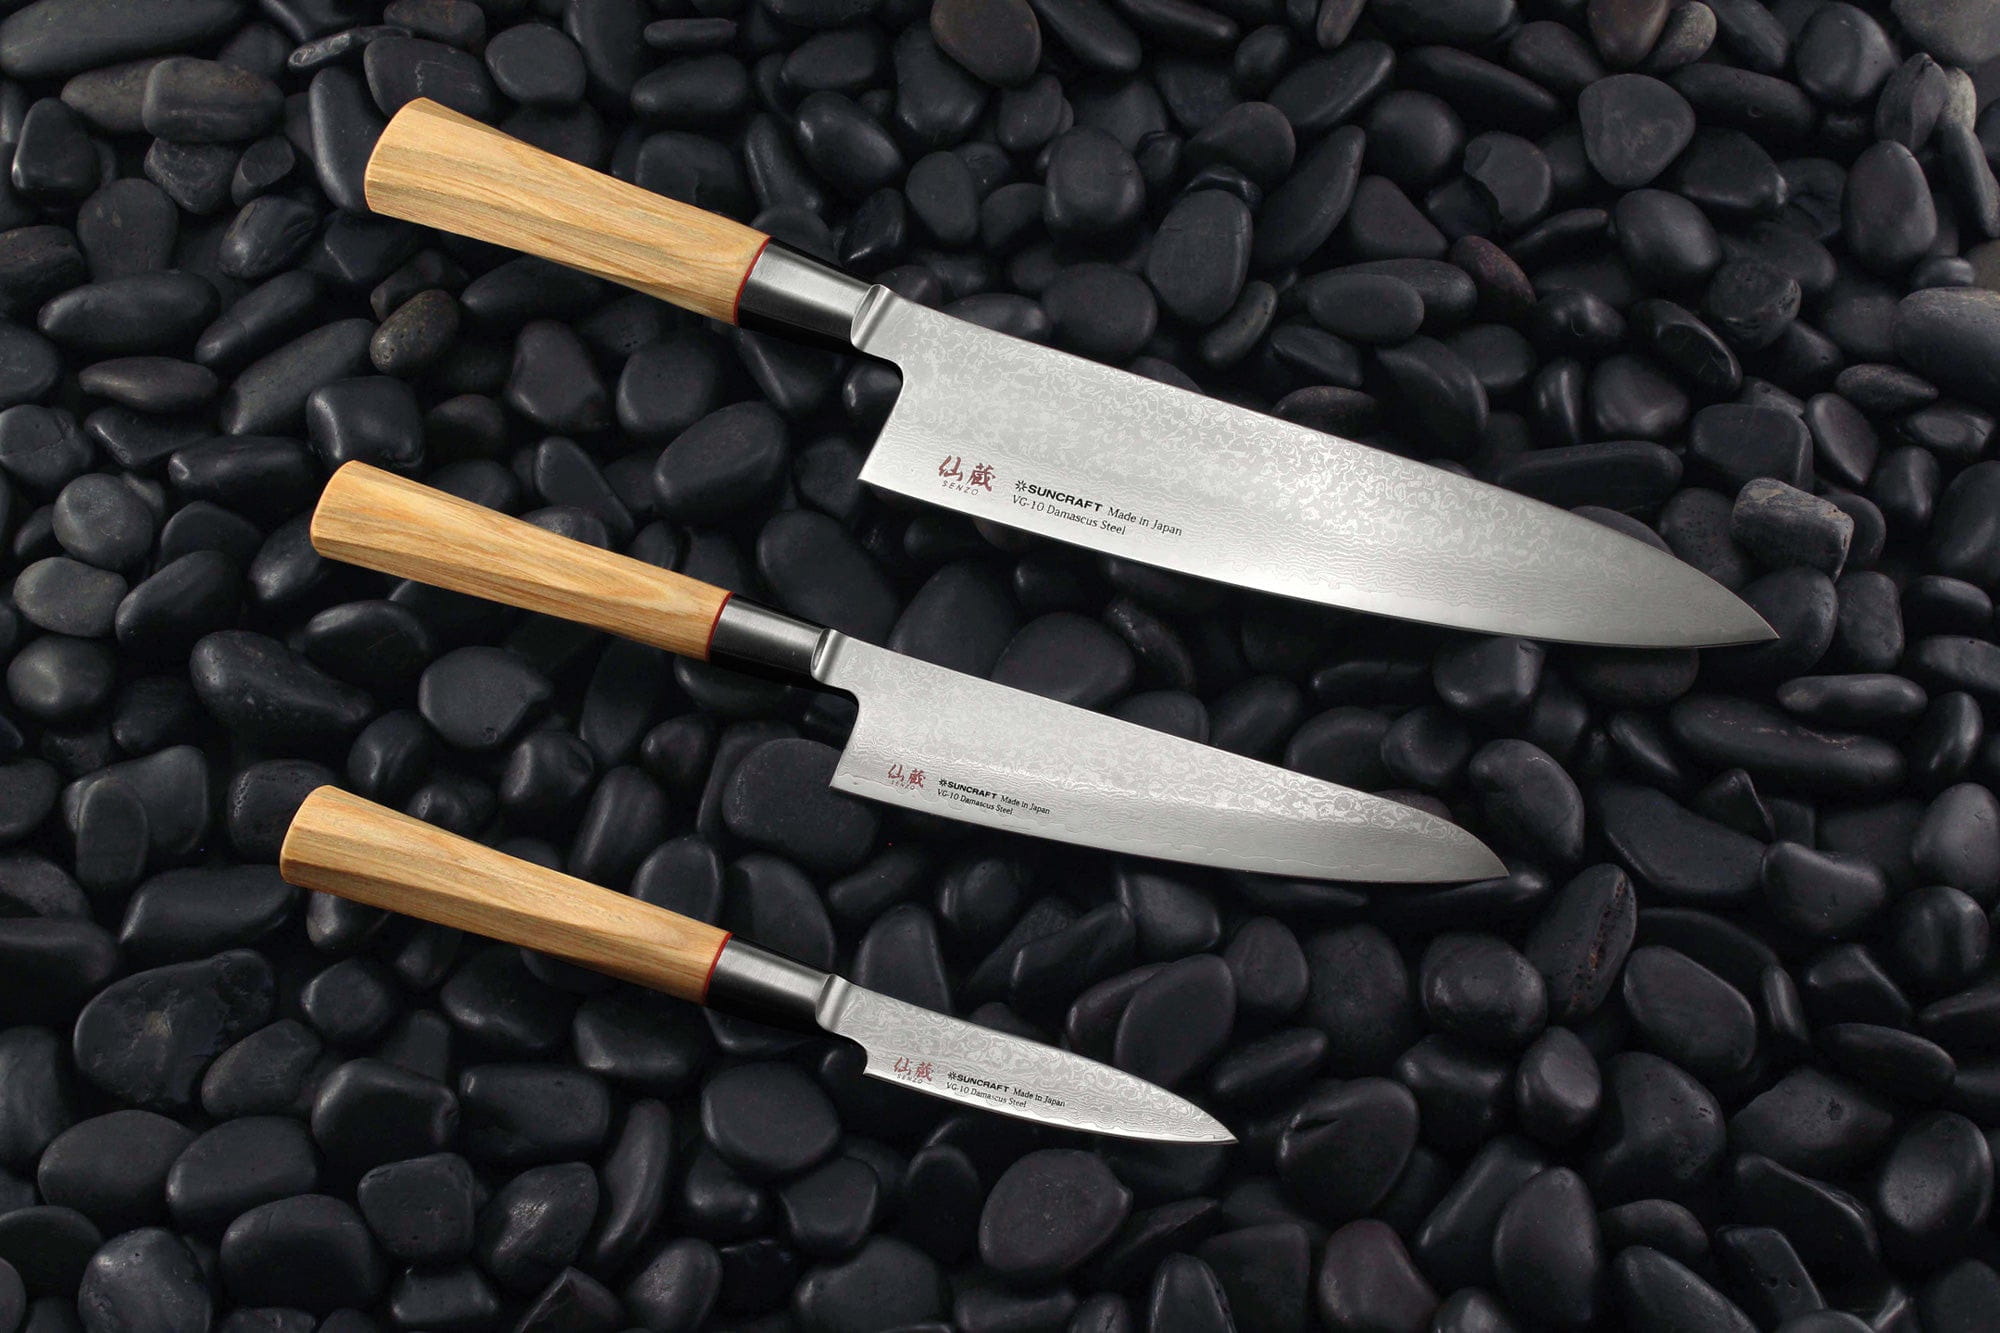 Senzo - 02 Universal Knife, 15 cm